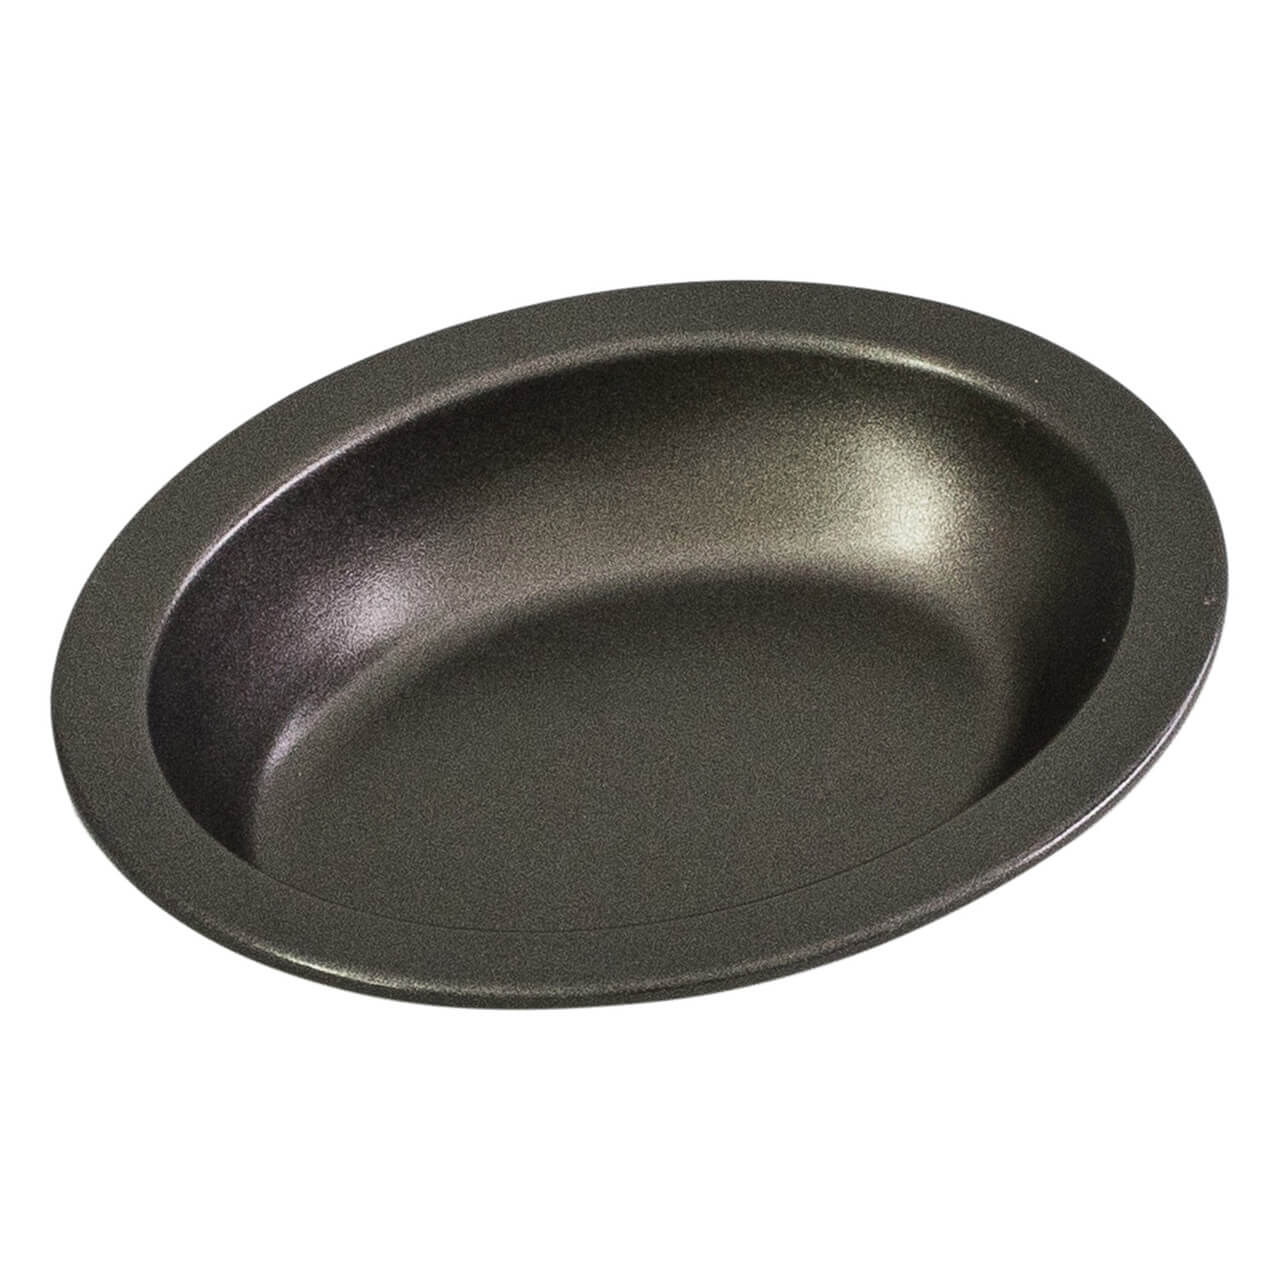 Bakemaster Oval Pie Dish 13.5x10x3cm